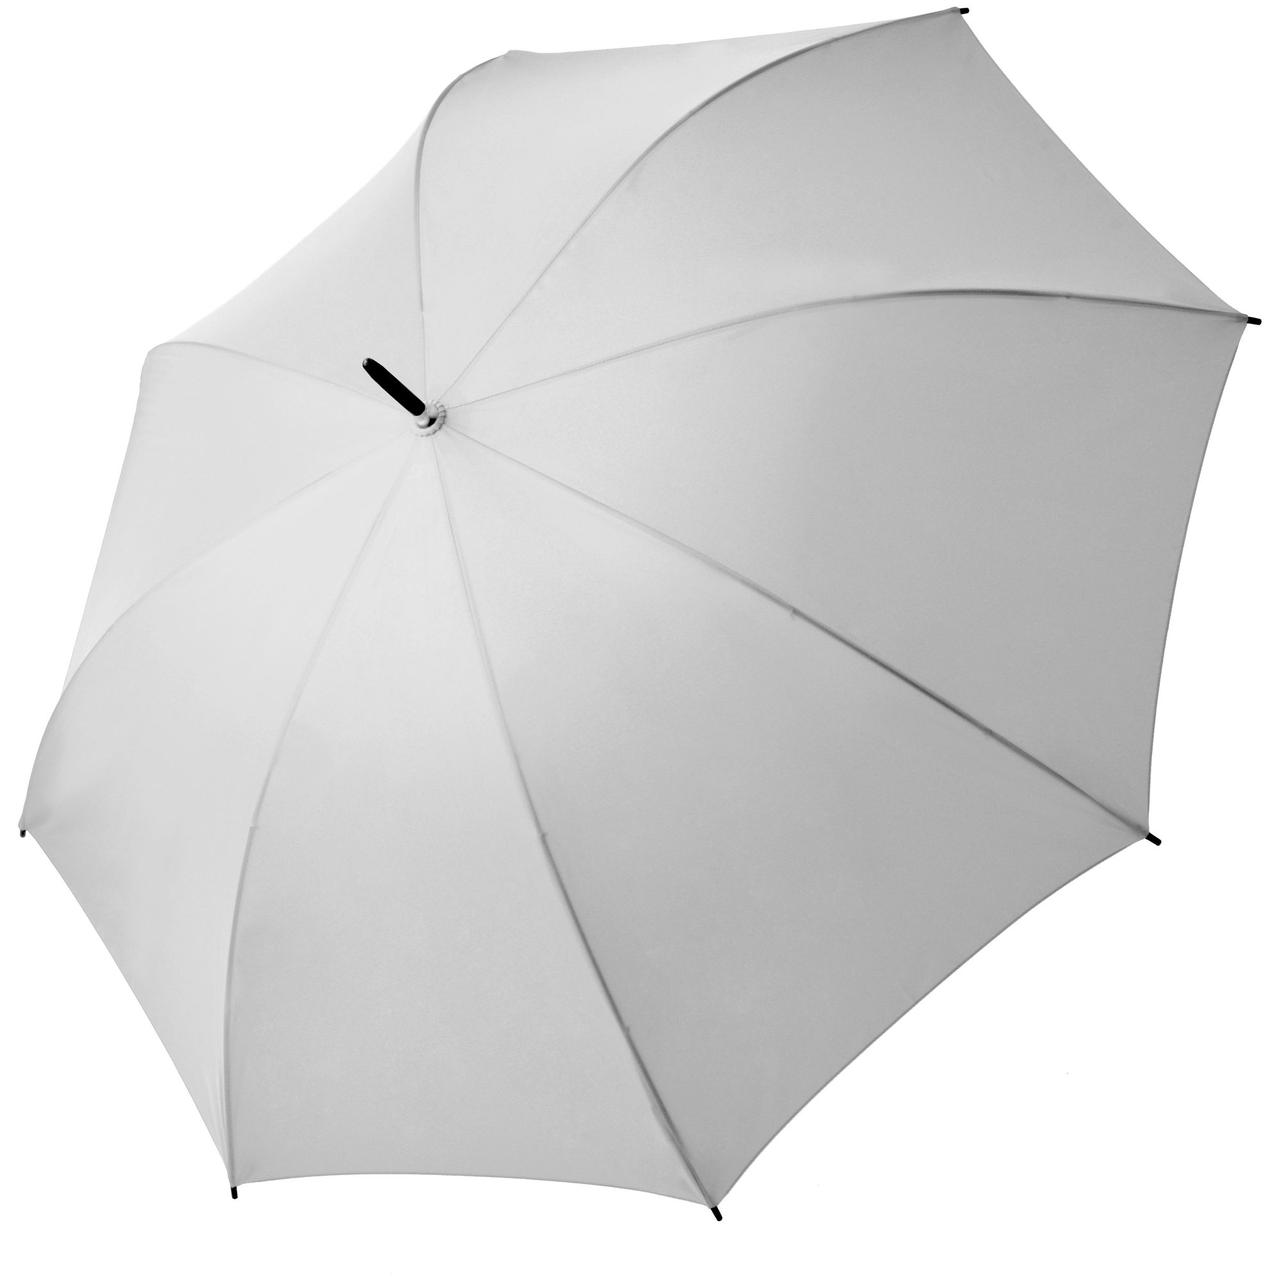 Зонт-трость Hit Golf AC, белый (артикул 11849.60), фото 1